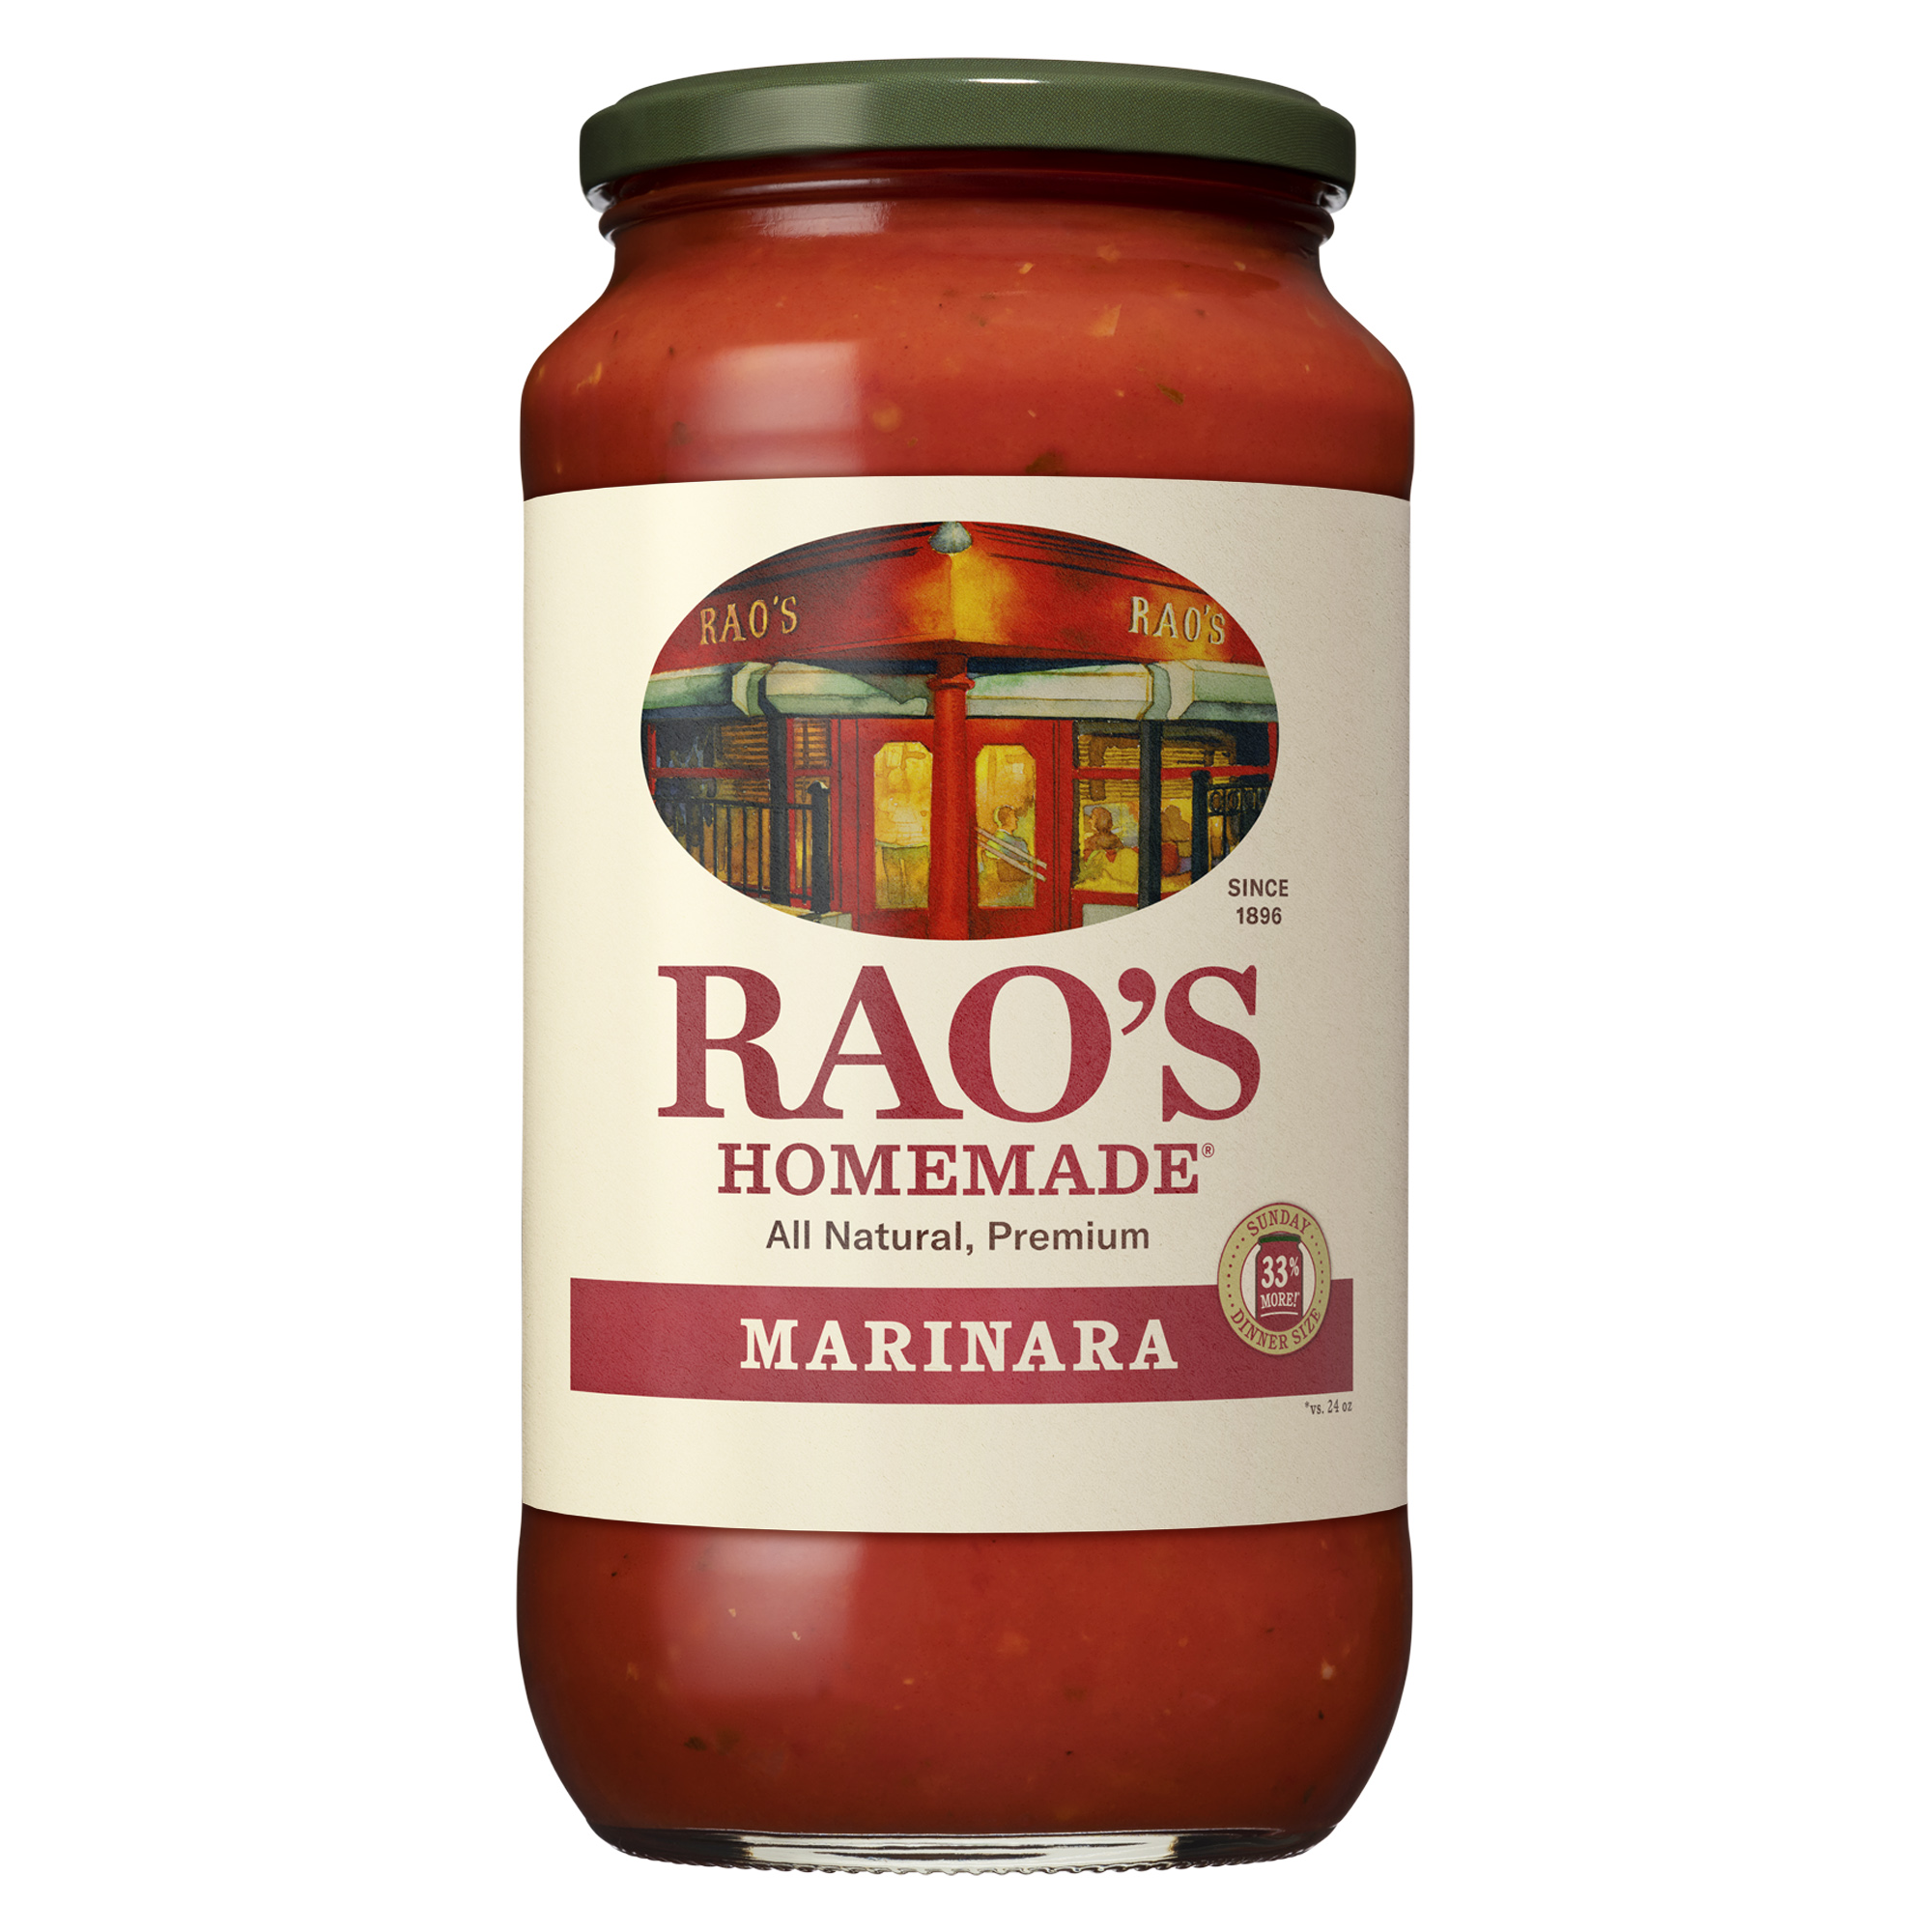 Rao's Homemade Marinara Sauce, Low Carb, All-Natural Spaghetti Sauce, 32 Oz - image 1 of 2